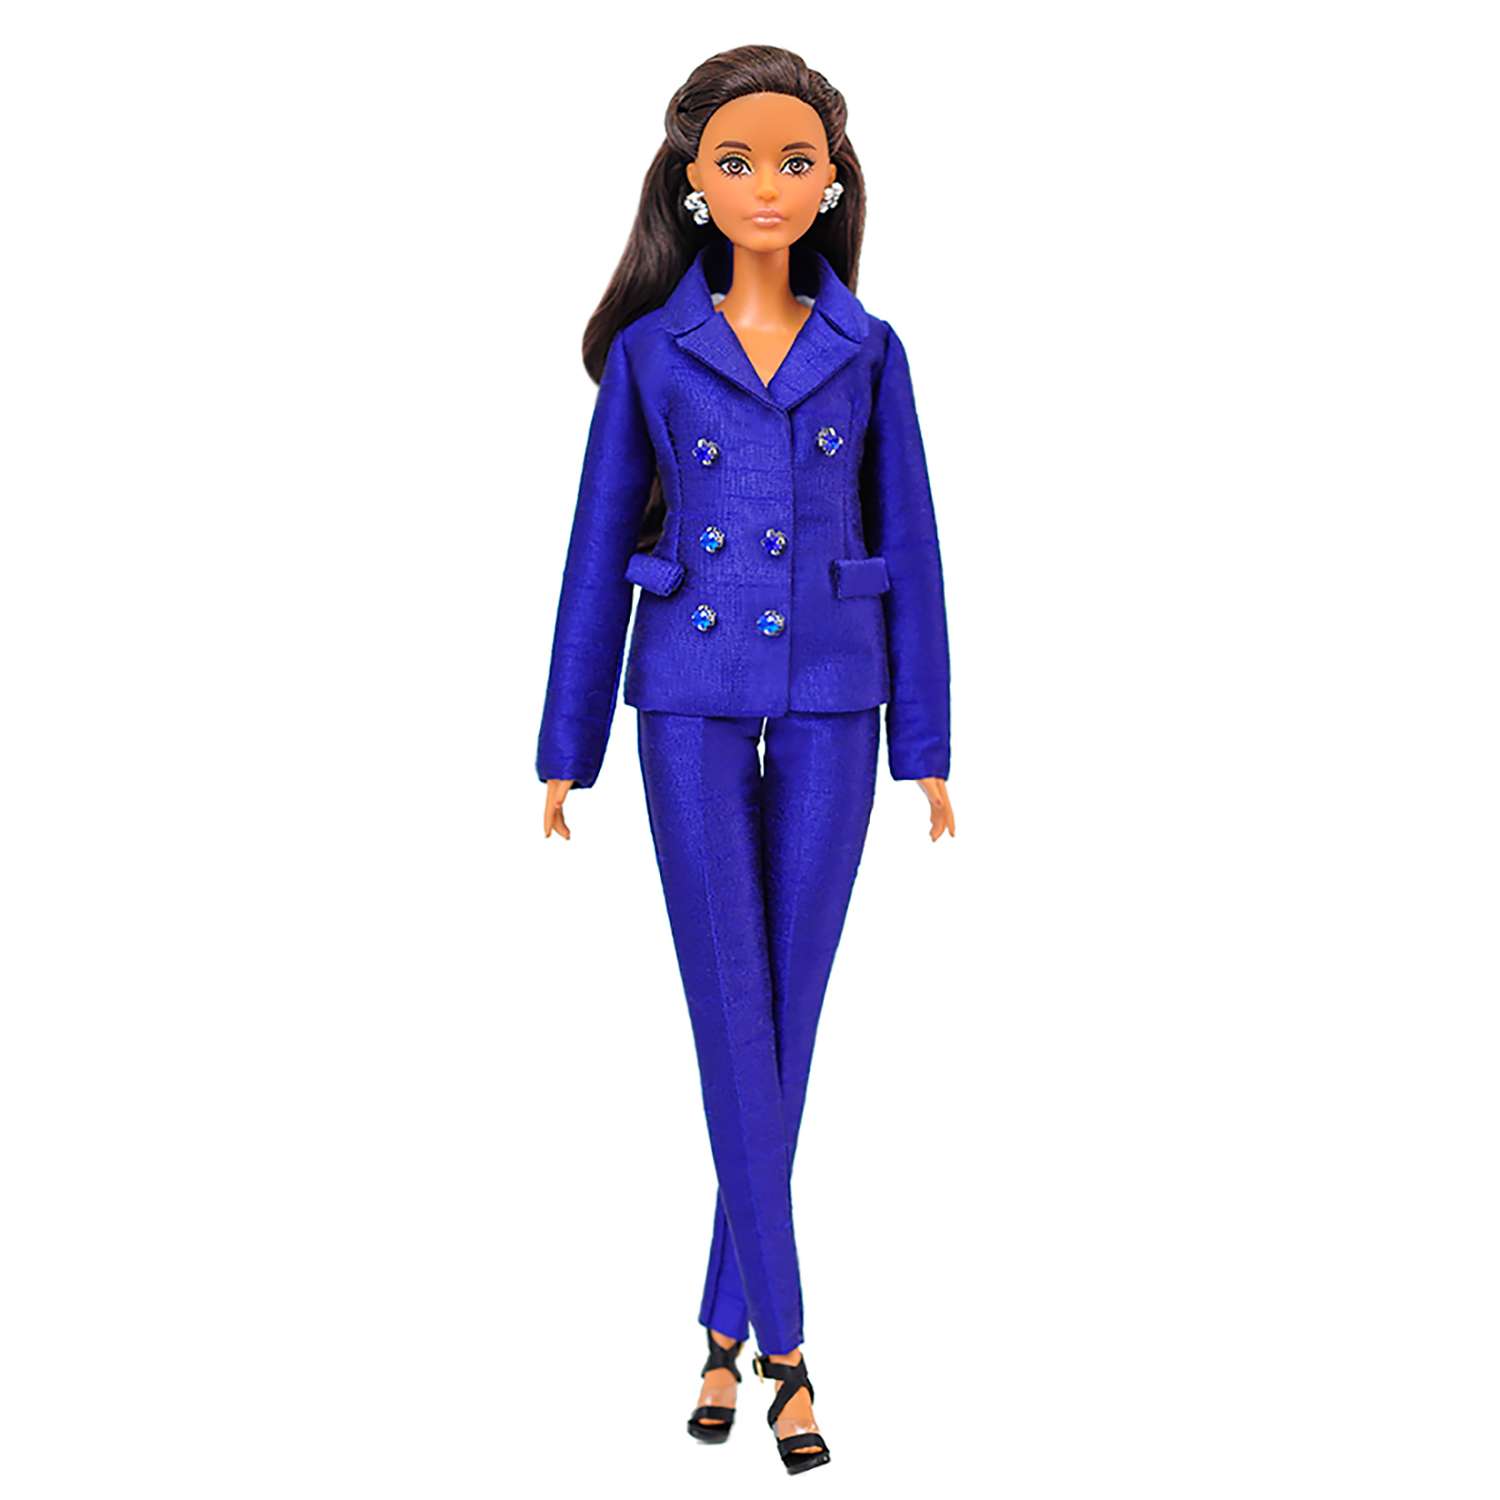 Шелковый брючный костюм Эленприв Синий для куклы 29 см типа Барби FA-011-01 - фото 6